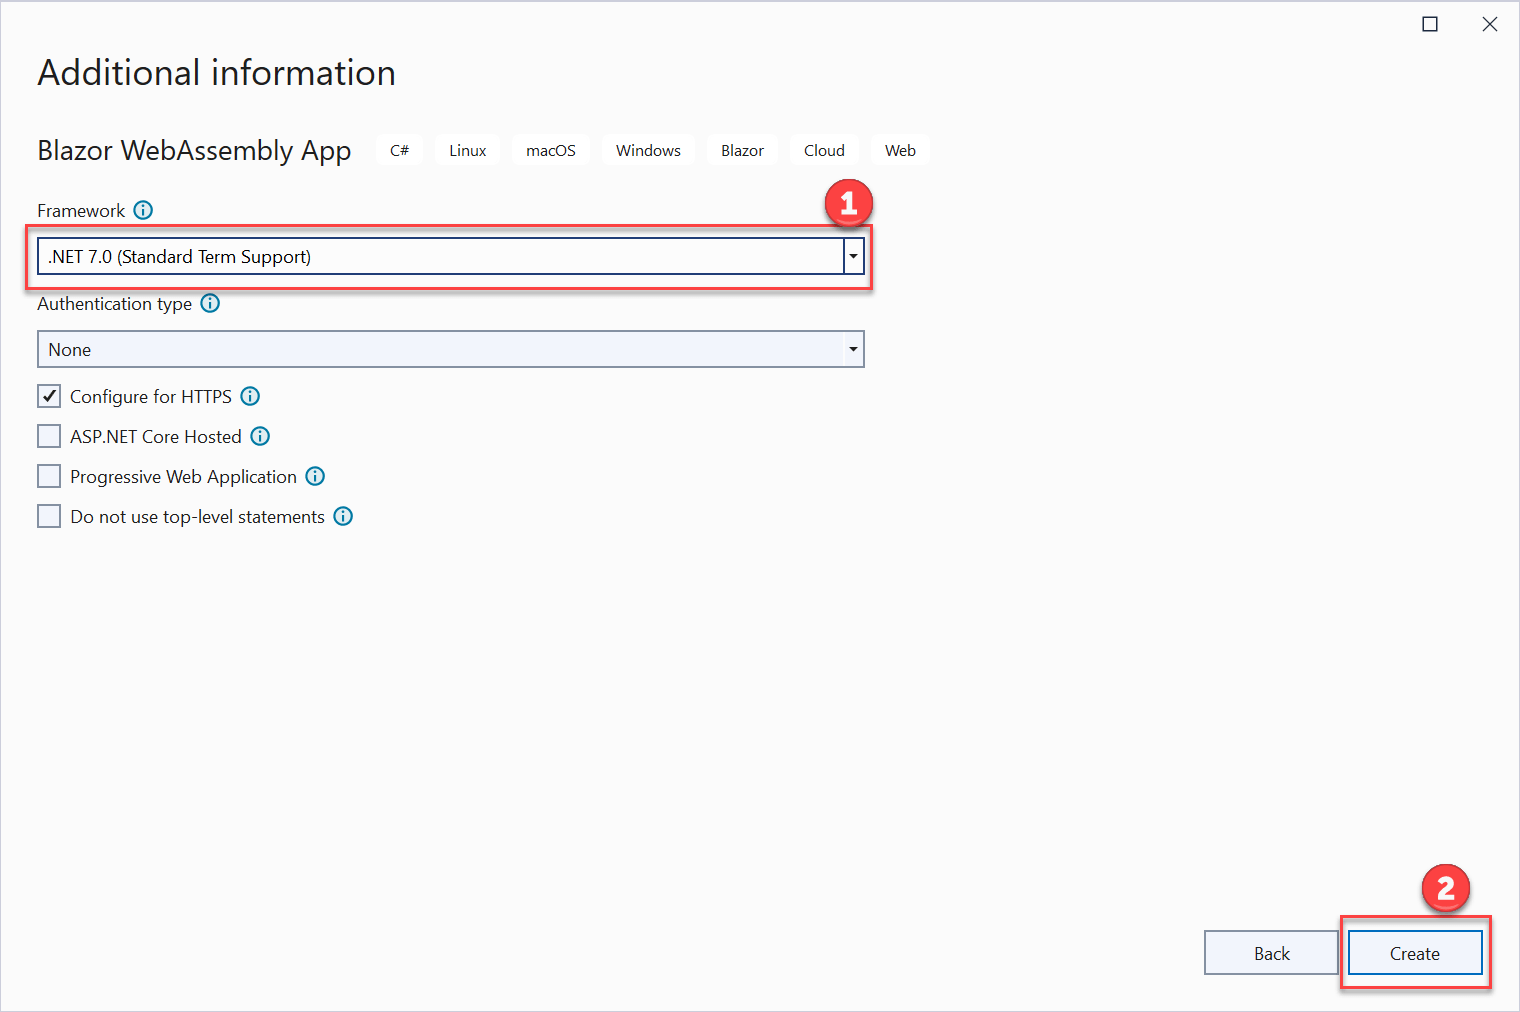 Additional information 对话框显示，其中选择了 .NET 7.0 作为框架，Create 按钮突出显示。